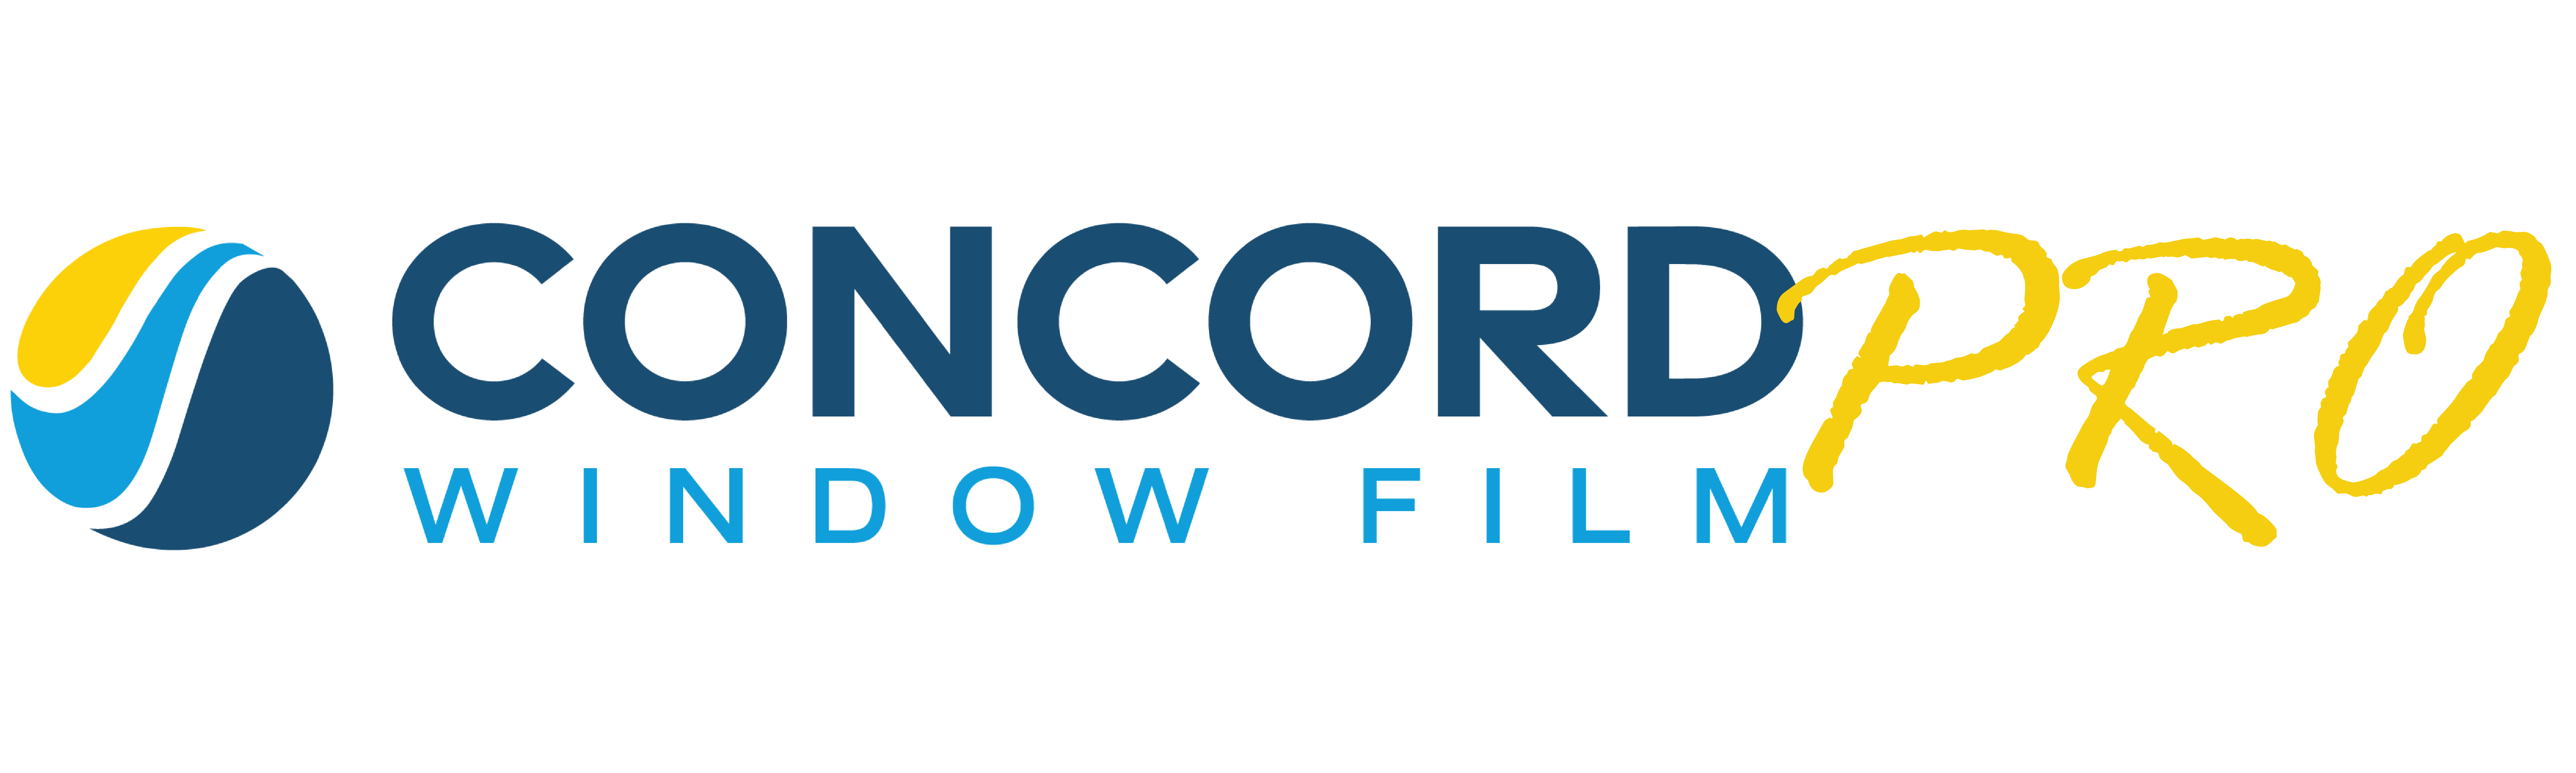 Concord Window Film Pro logo